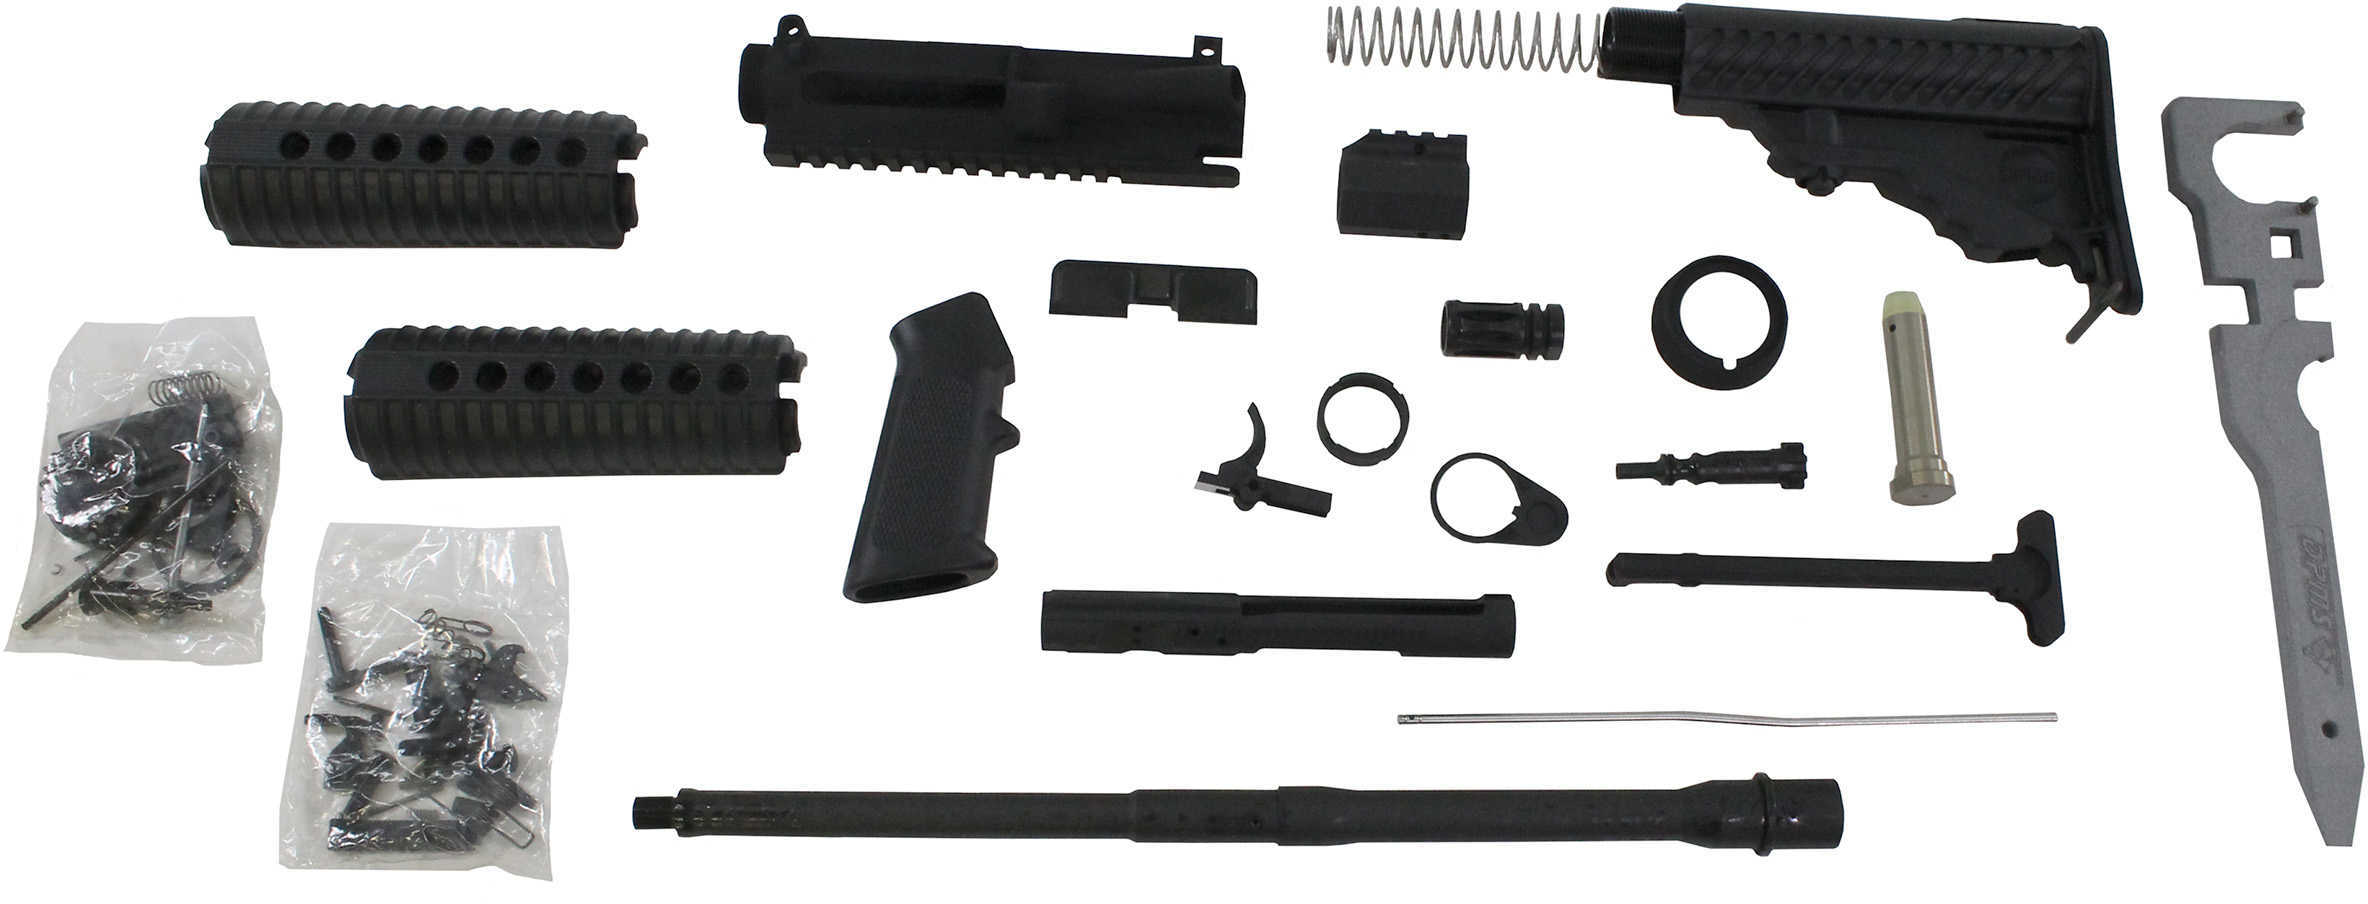 DPMS Oracle Rifle Kit 223 Rem Black Less Lower Receiver Fits AR Rifles 60686